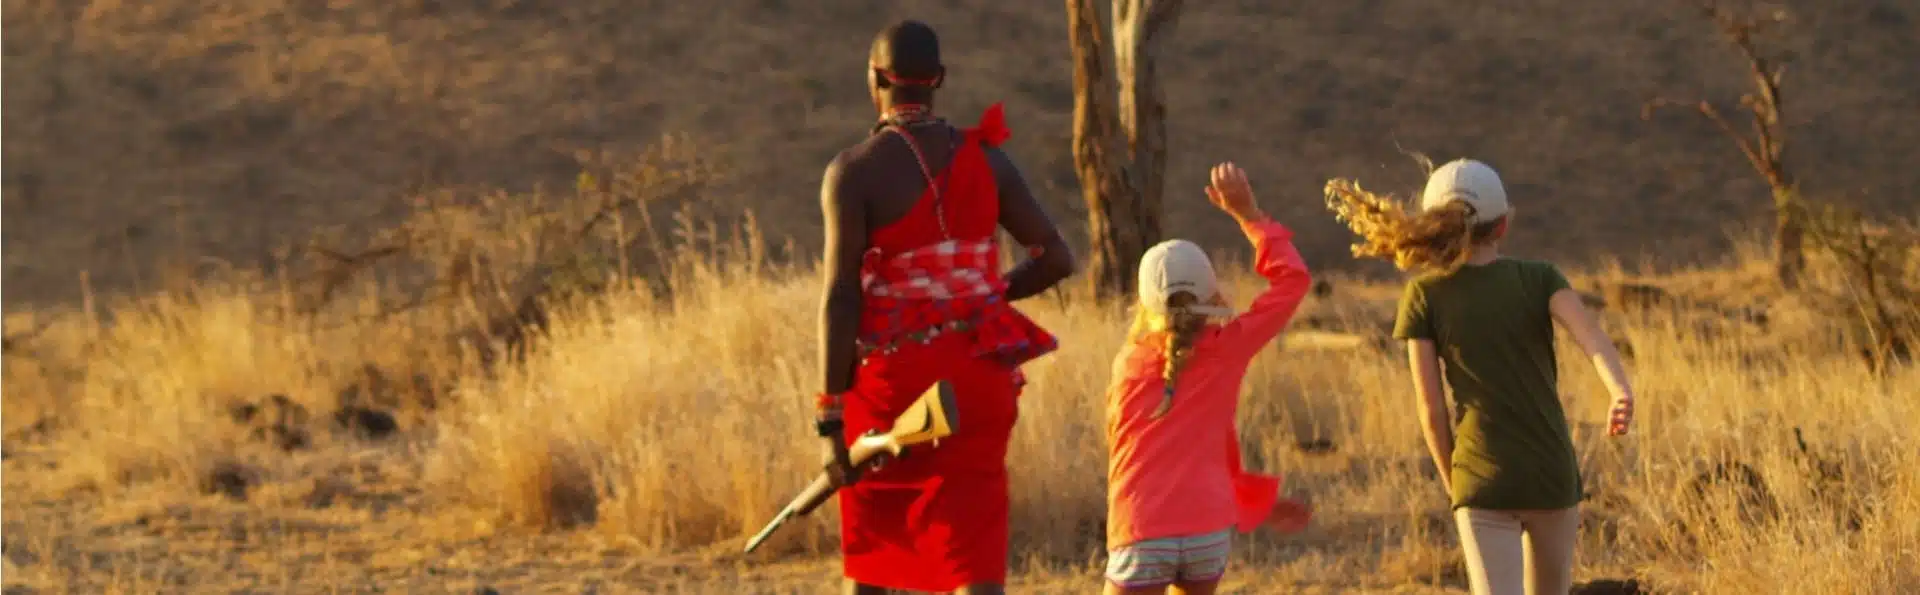 Kenya family walking safari Maasai